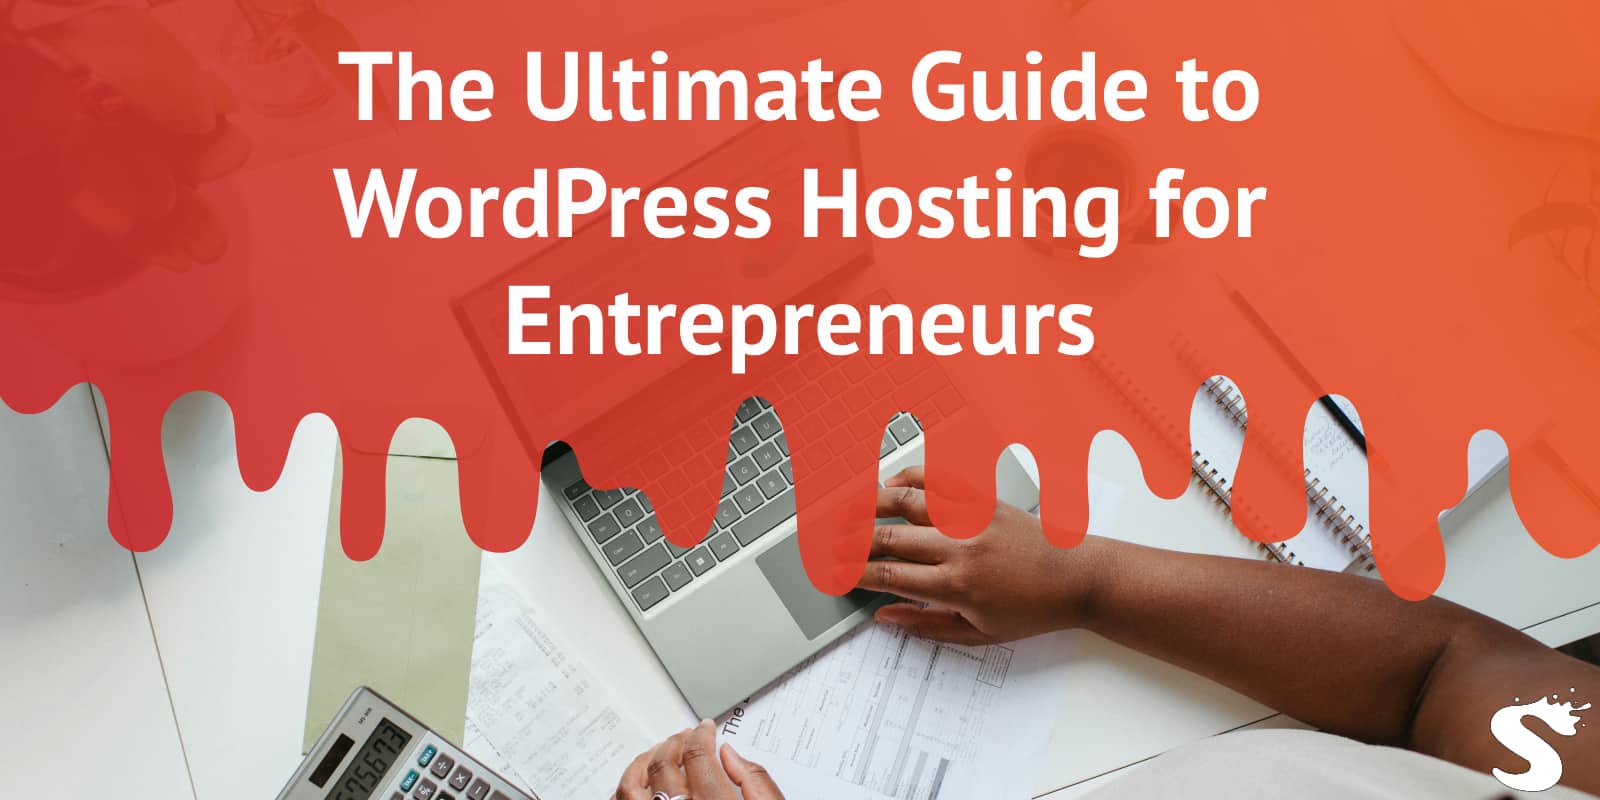 The Ultimate Guide to WordPress Hosting for Entrepreneurs